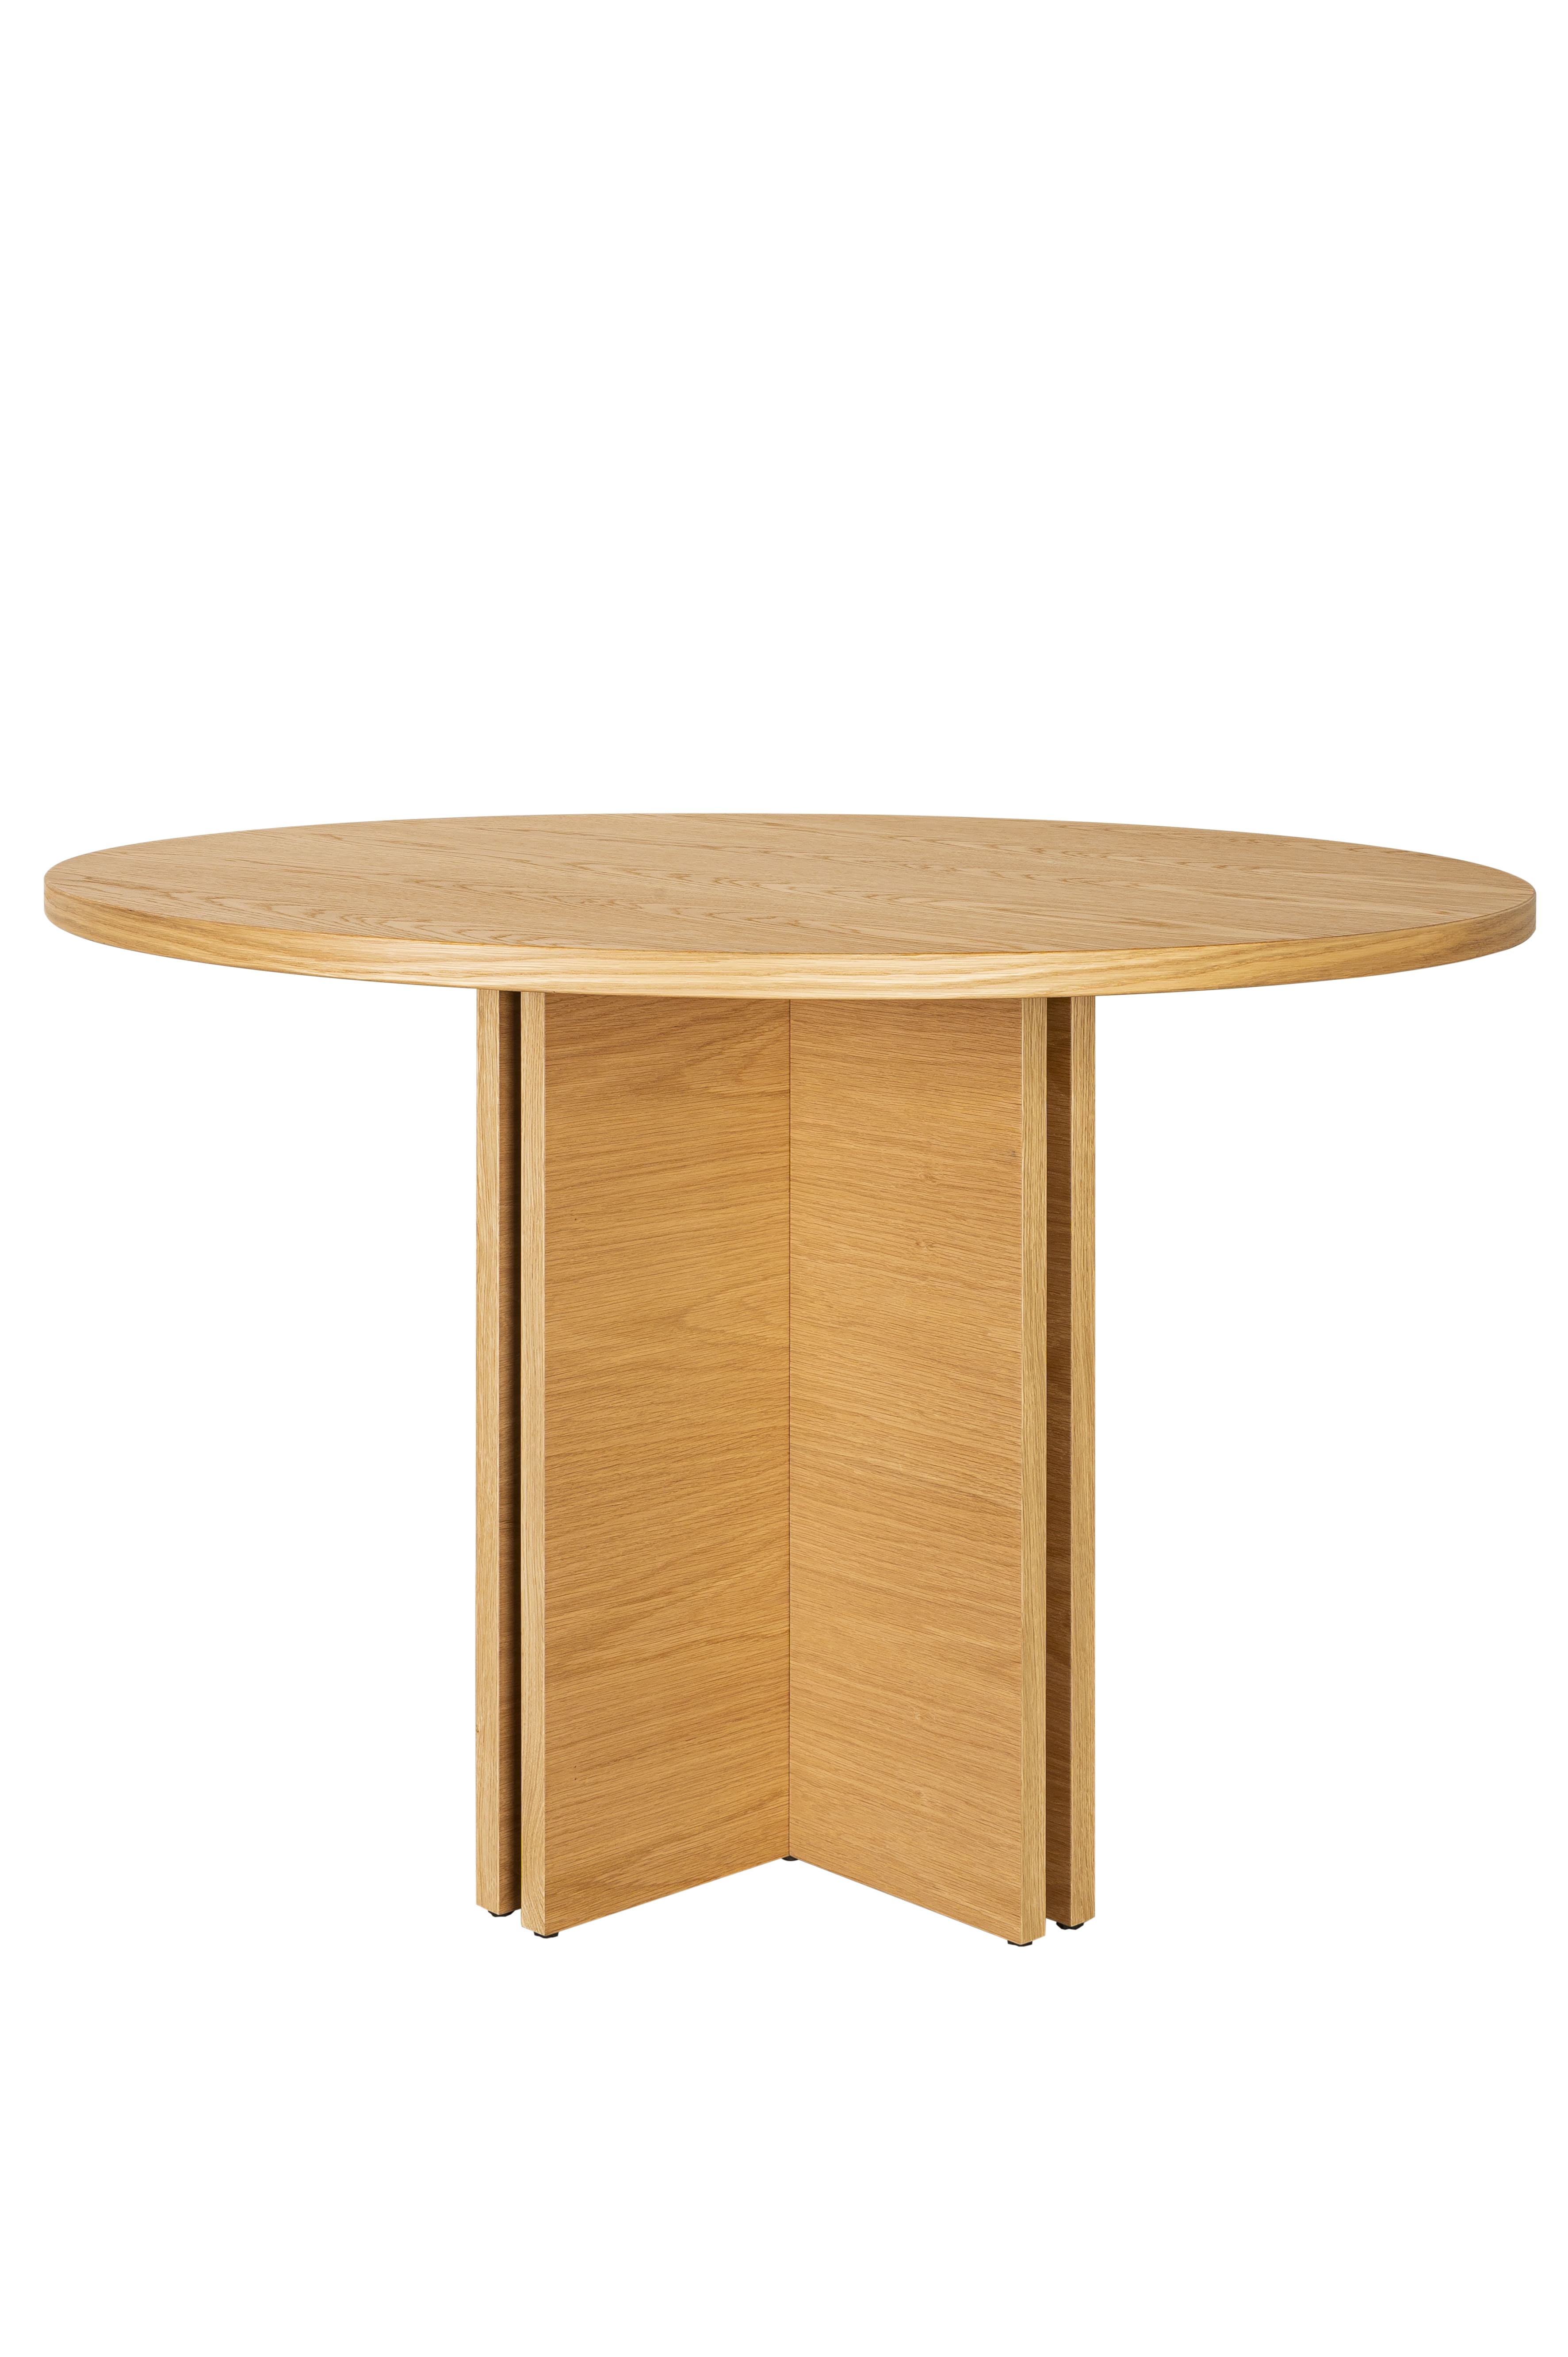 Stůl BARDI, více variant - Hobby Flower Barva: přírodní dub, matný